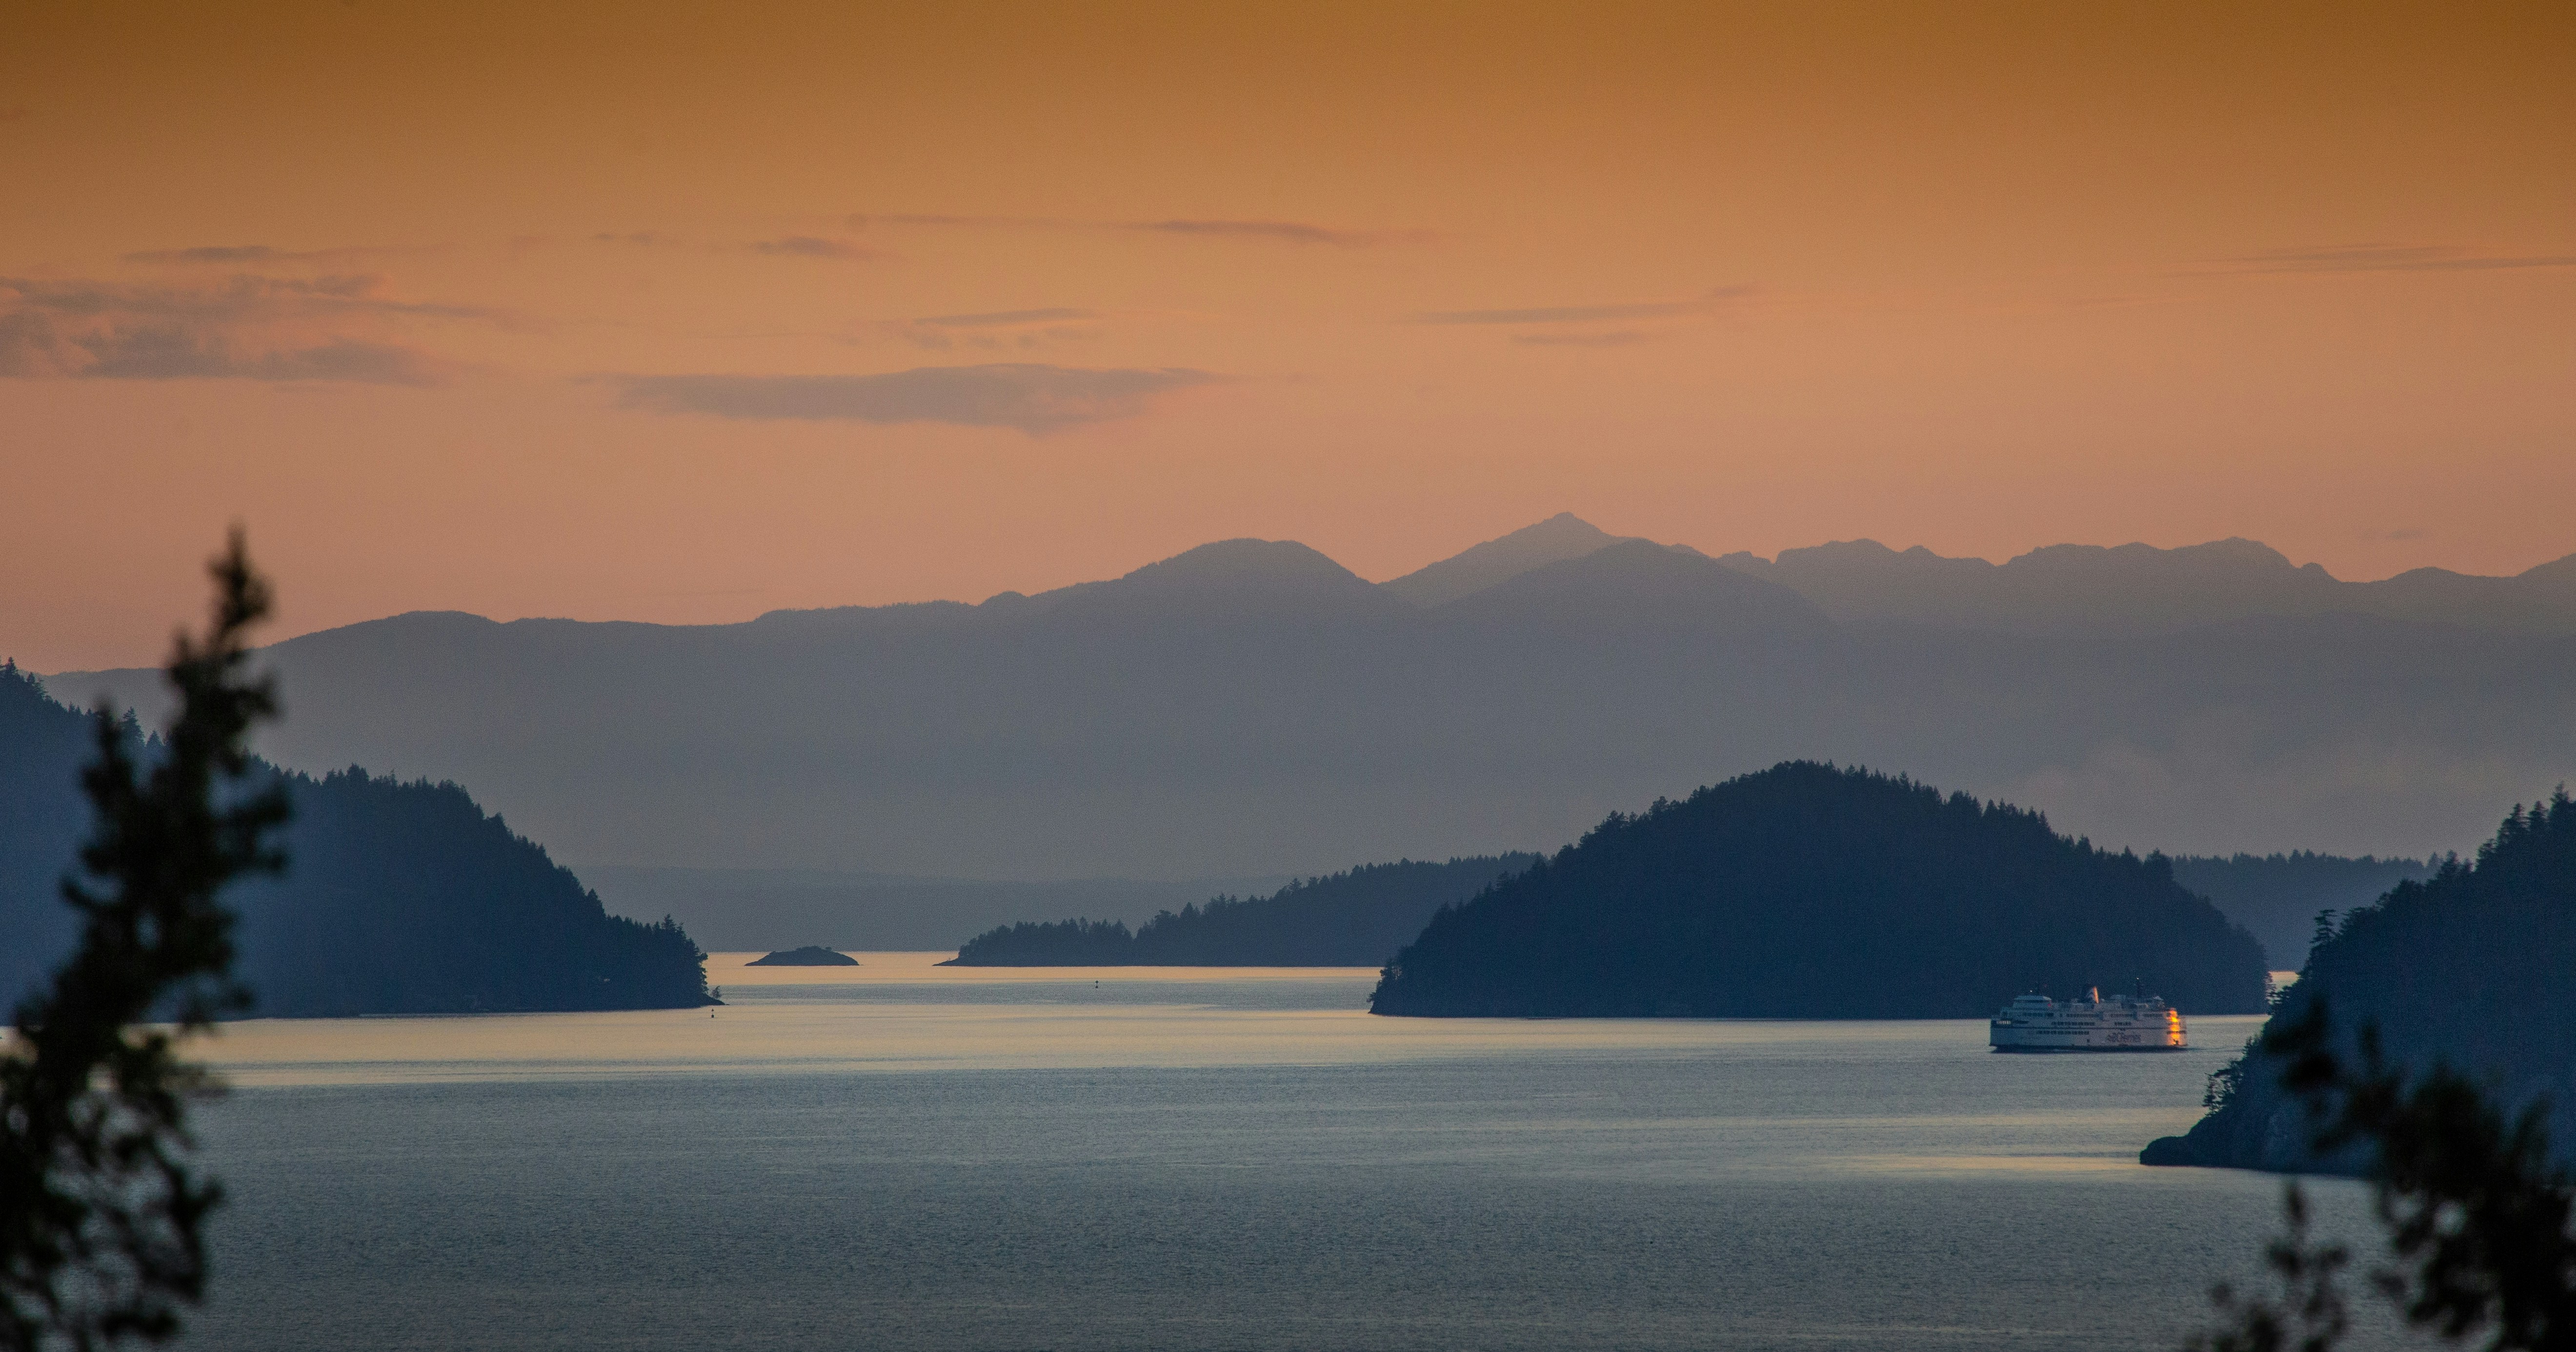 Howe Sound in British Columbia